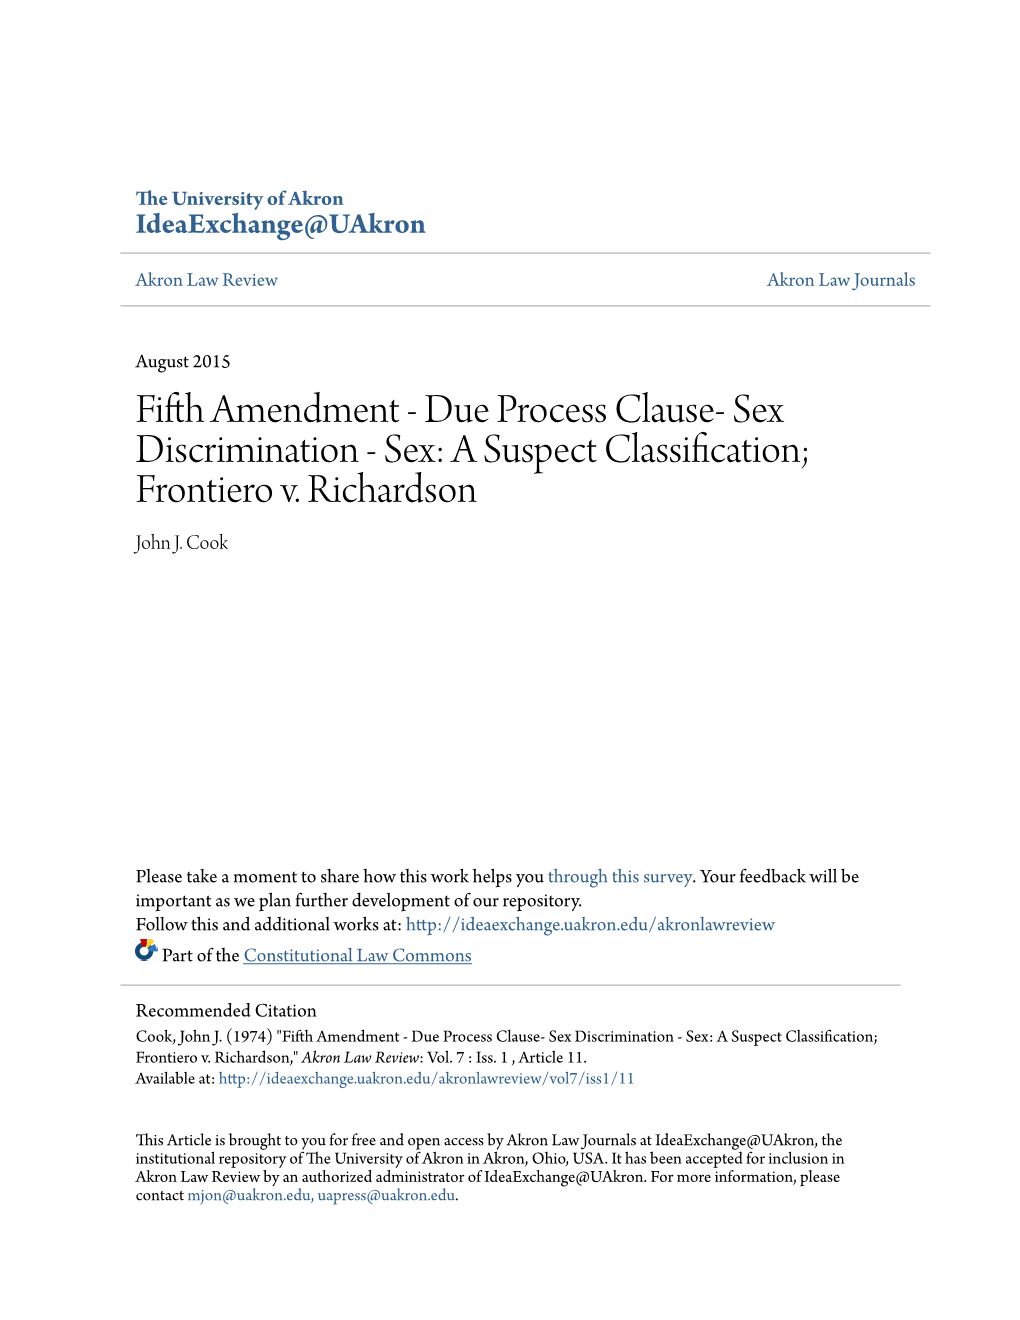 Fifth Amendment - Due Process Clause- Sex Discrimination - Sex: a Suspect Classification; Frontiero V